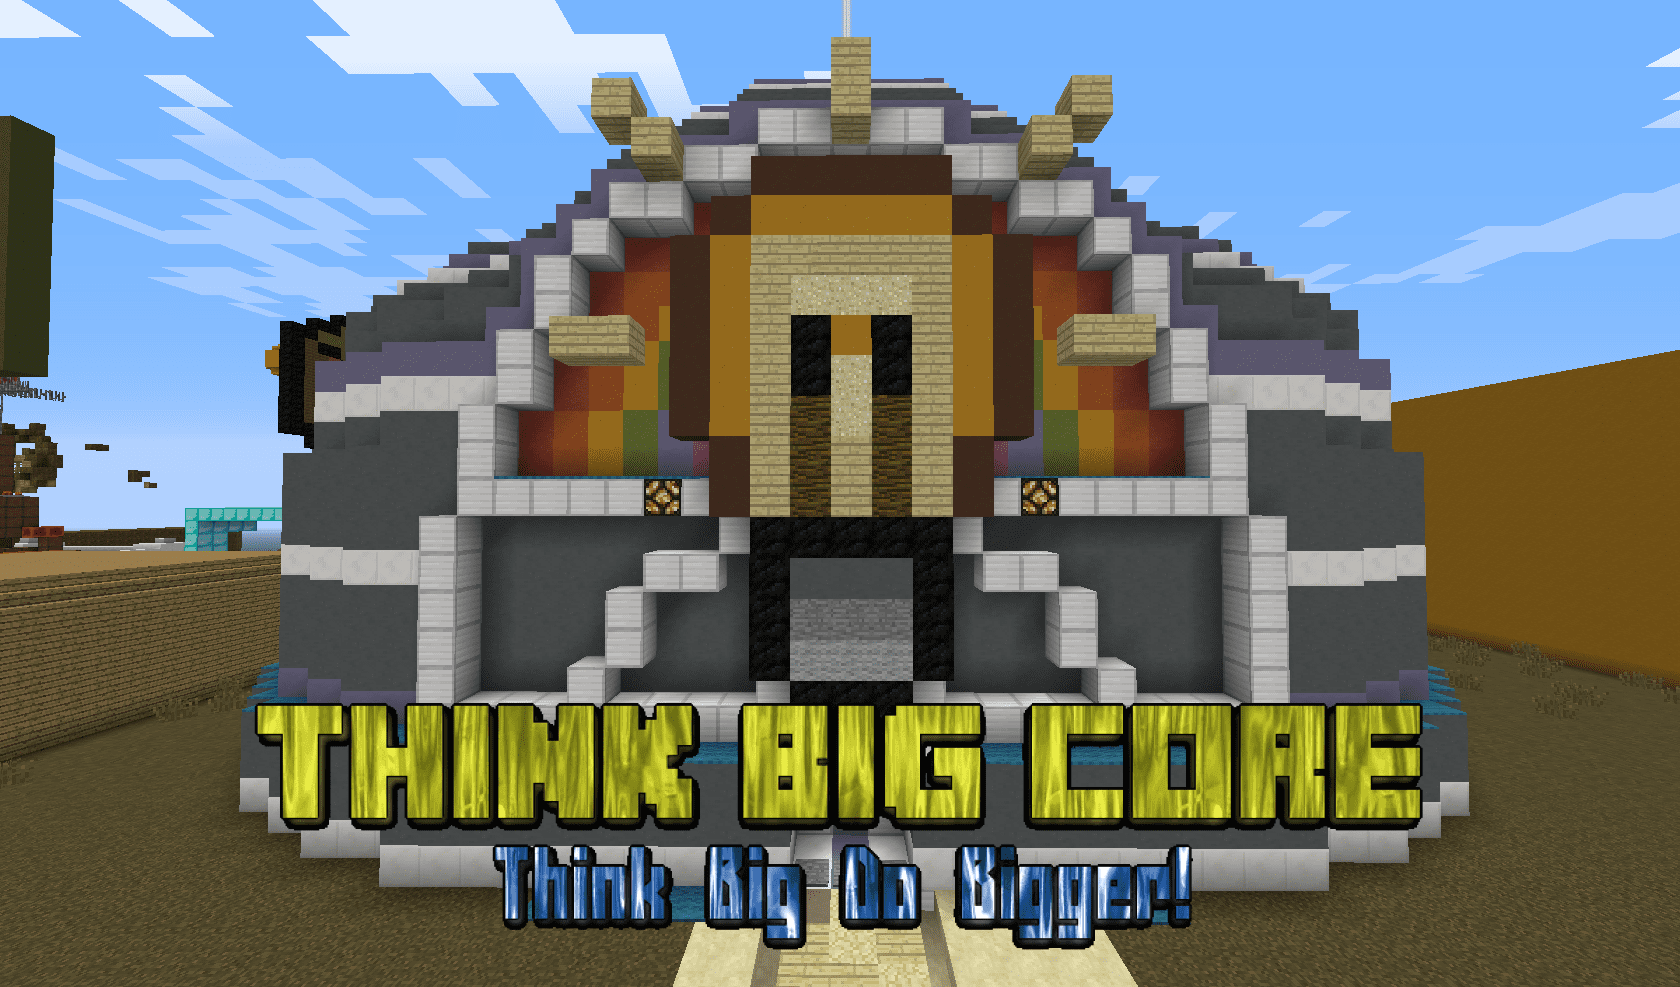 Think Big Core